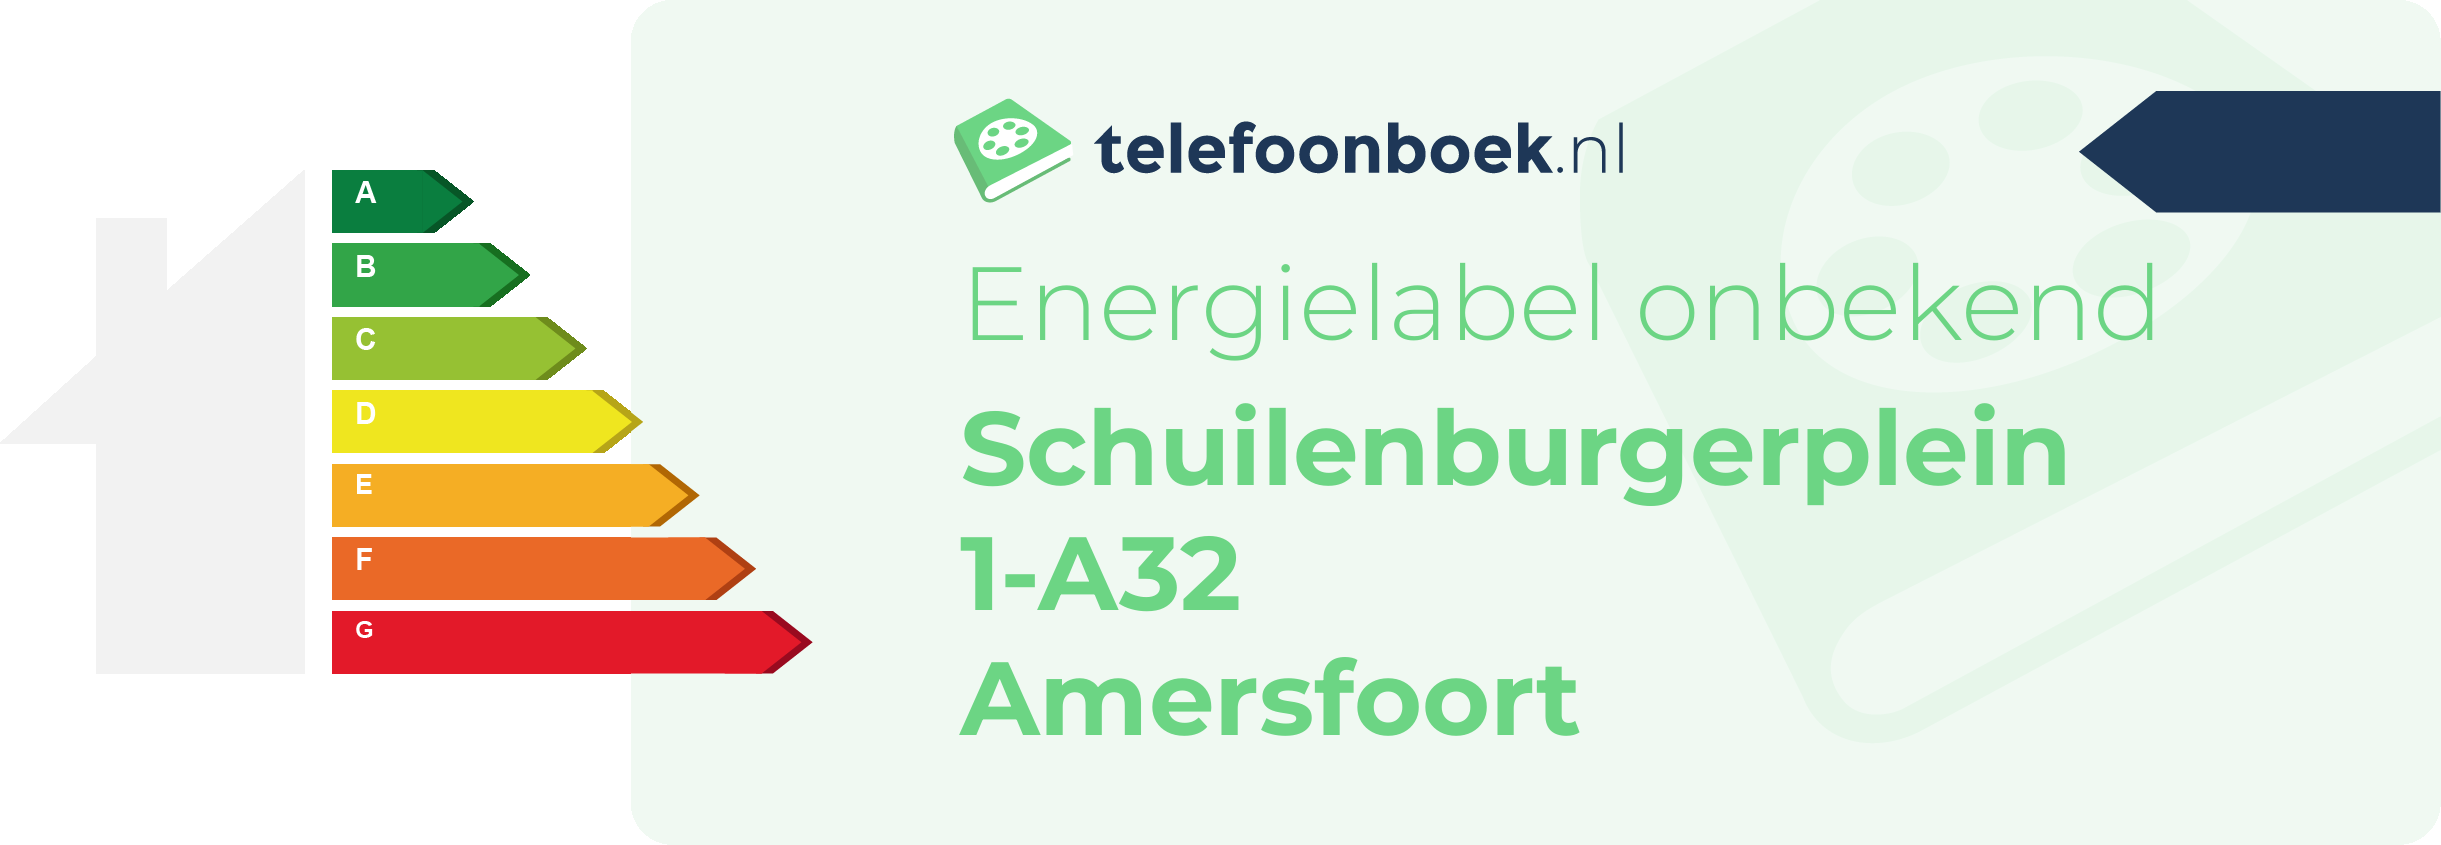 Energielabel Schuilenburgerplein 1-A32 Amersfoort